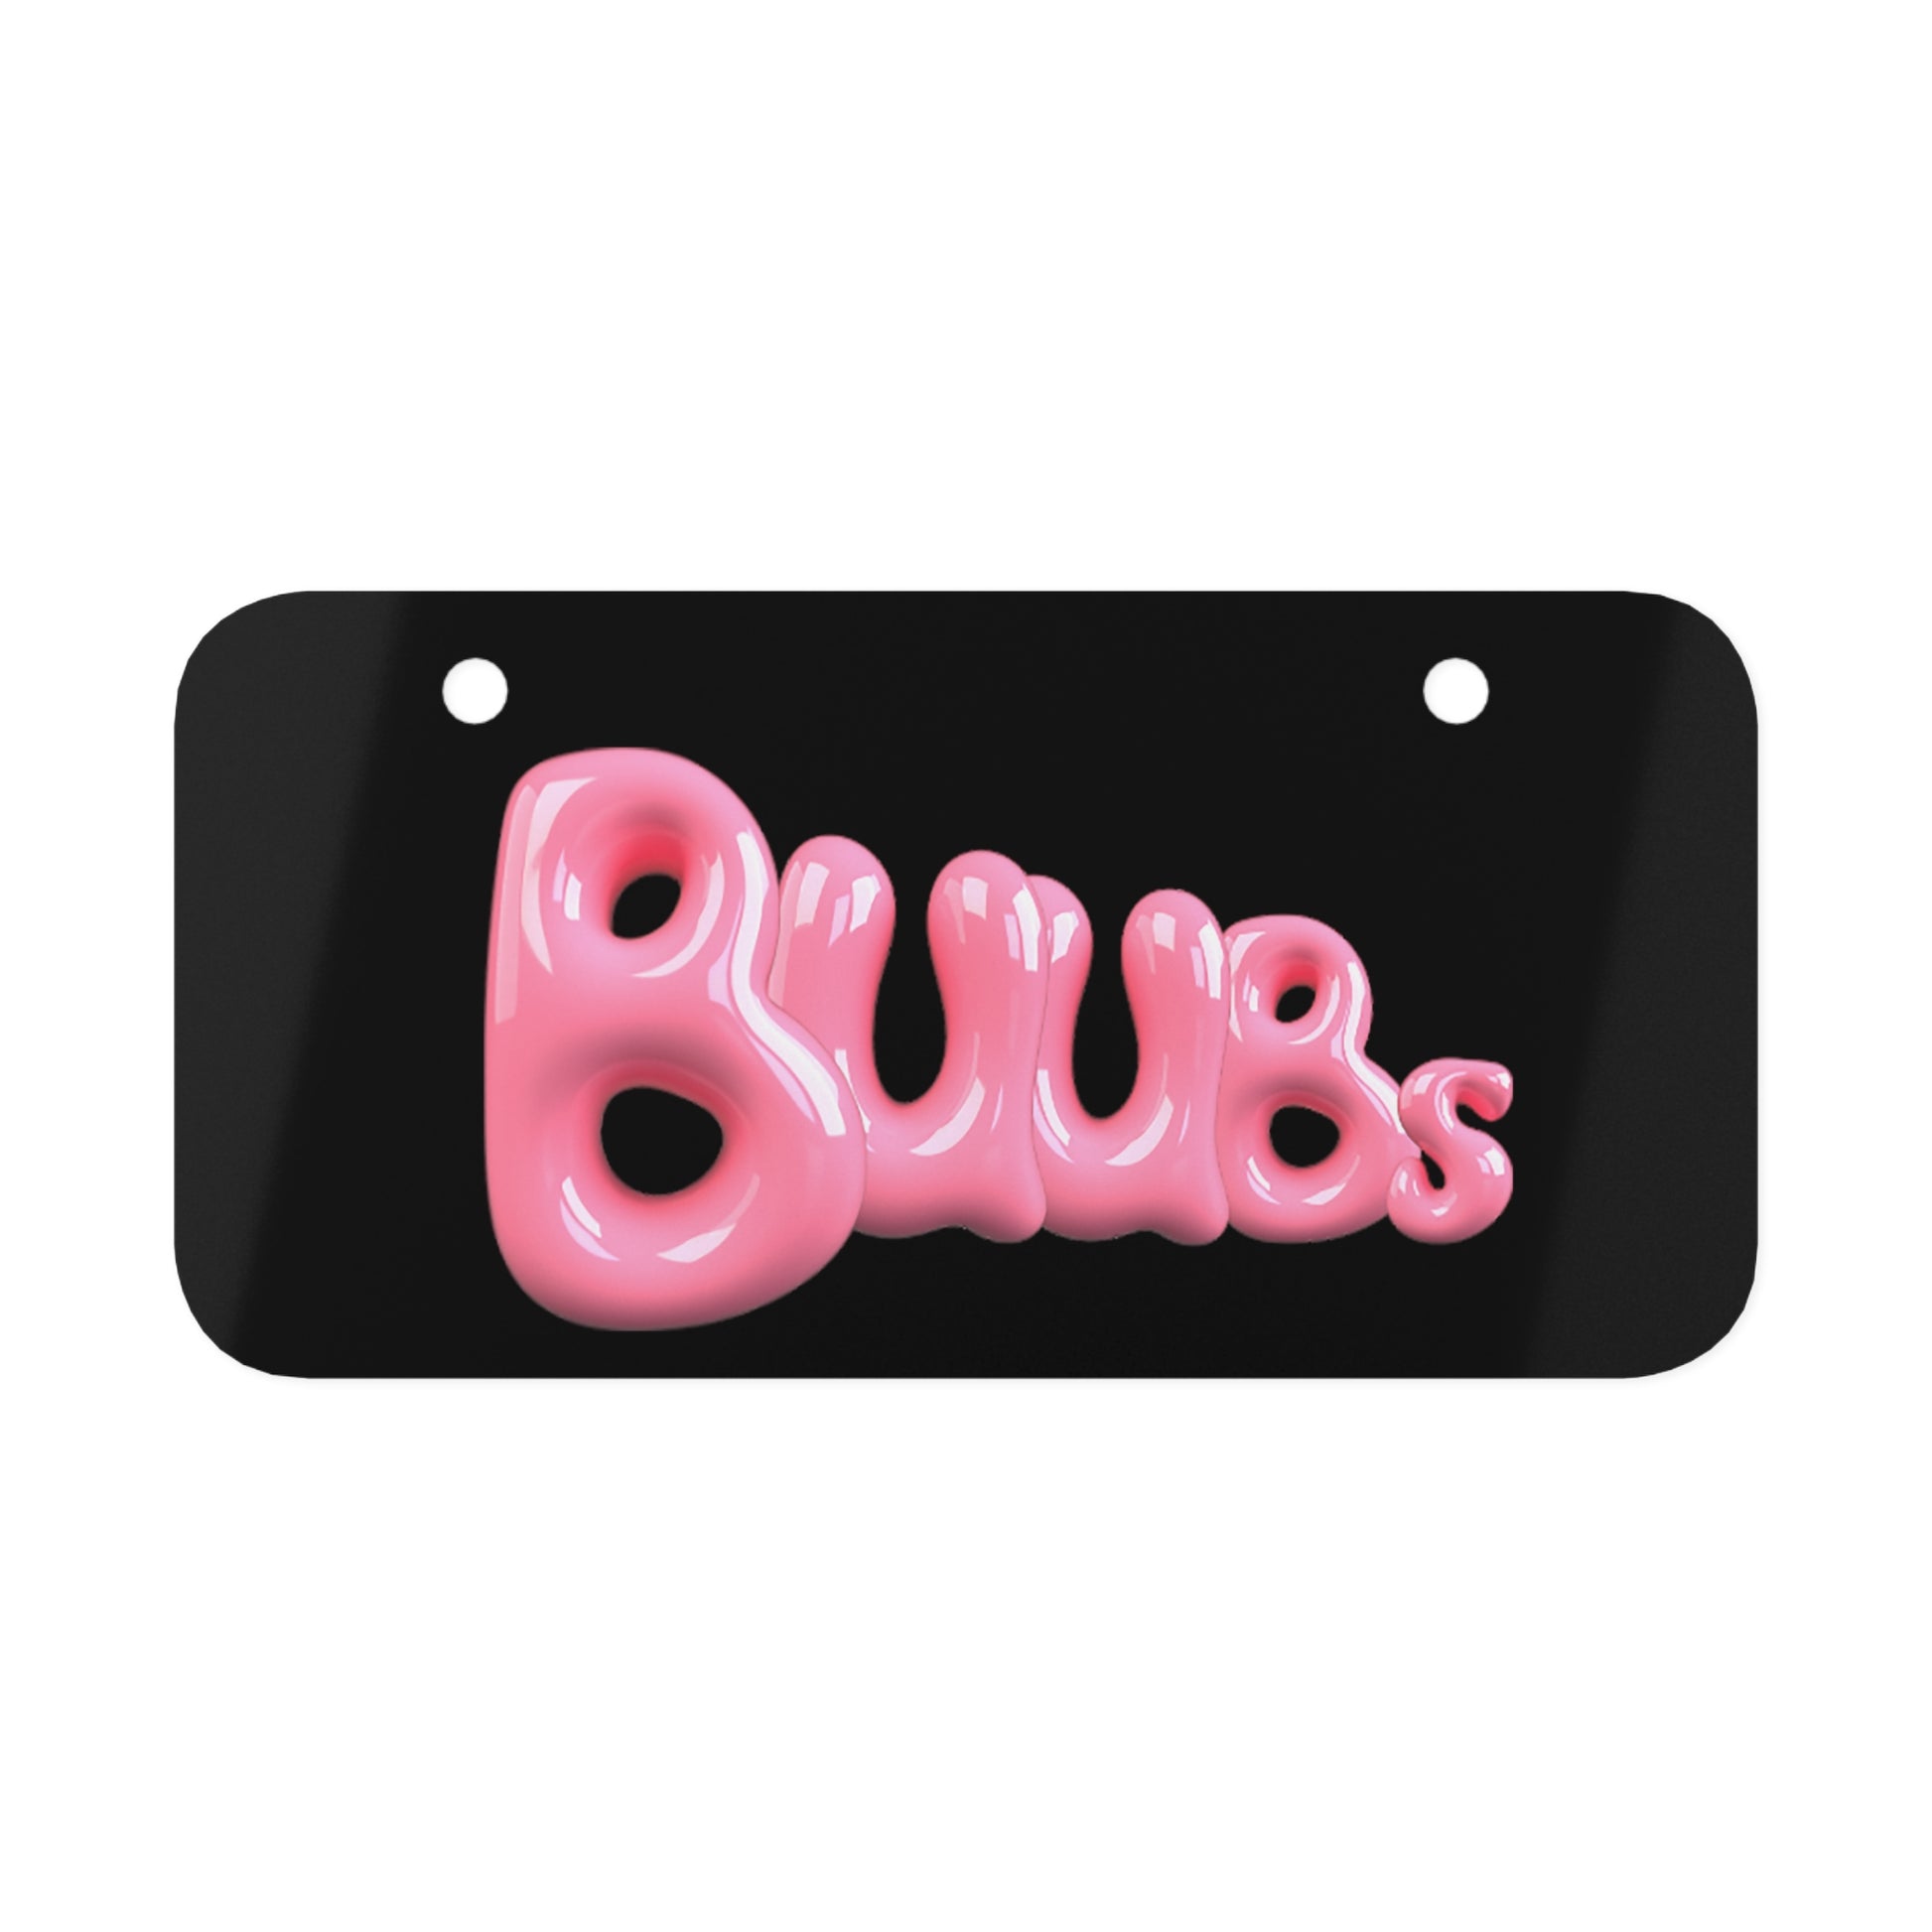 Stamina for Men | "BuuBs" Mini License Plate - Stamina for Men®